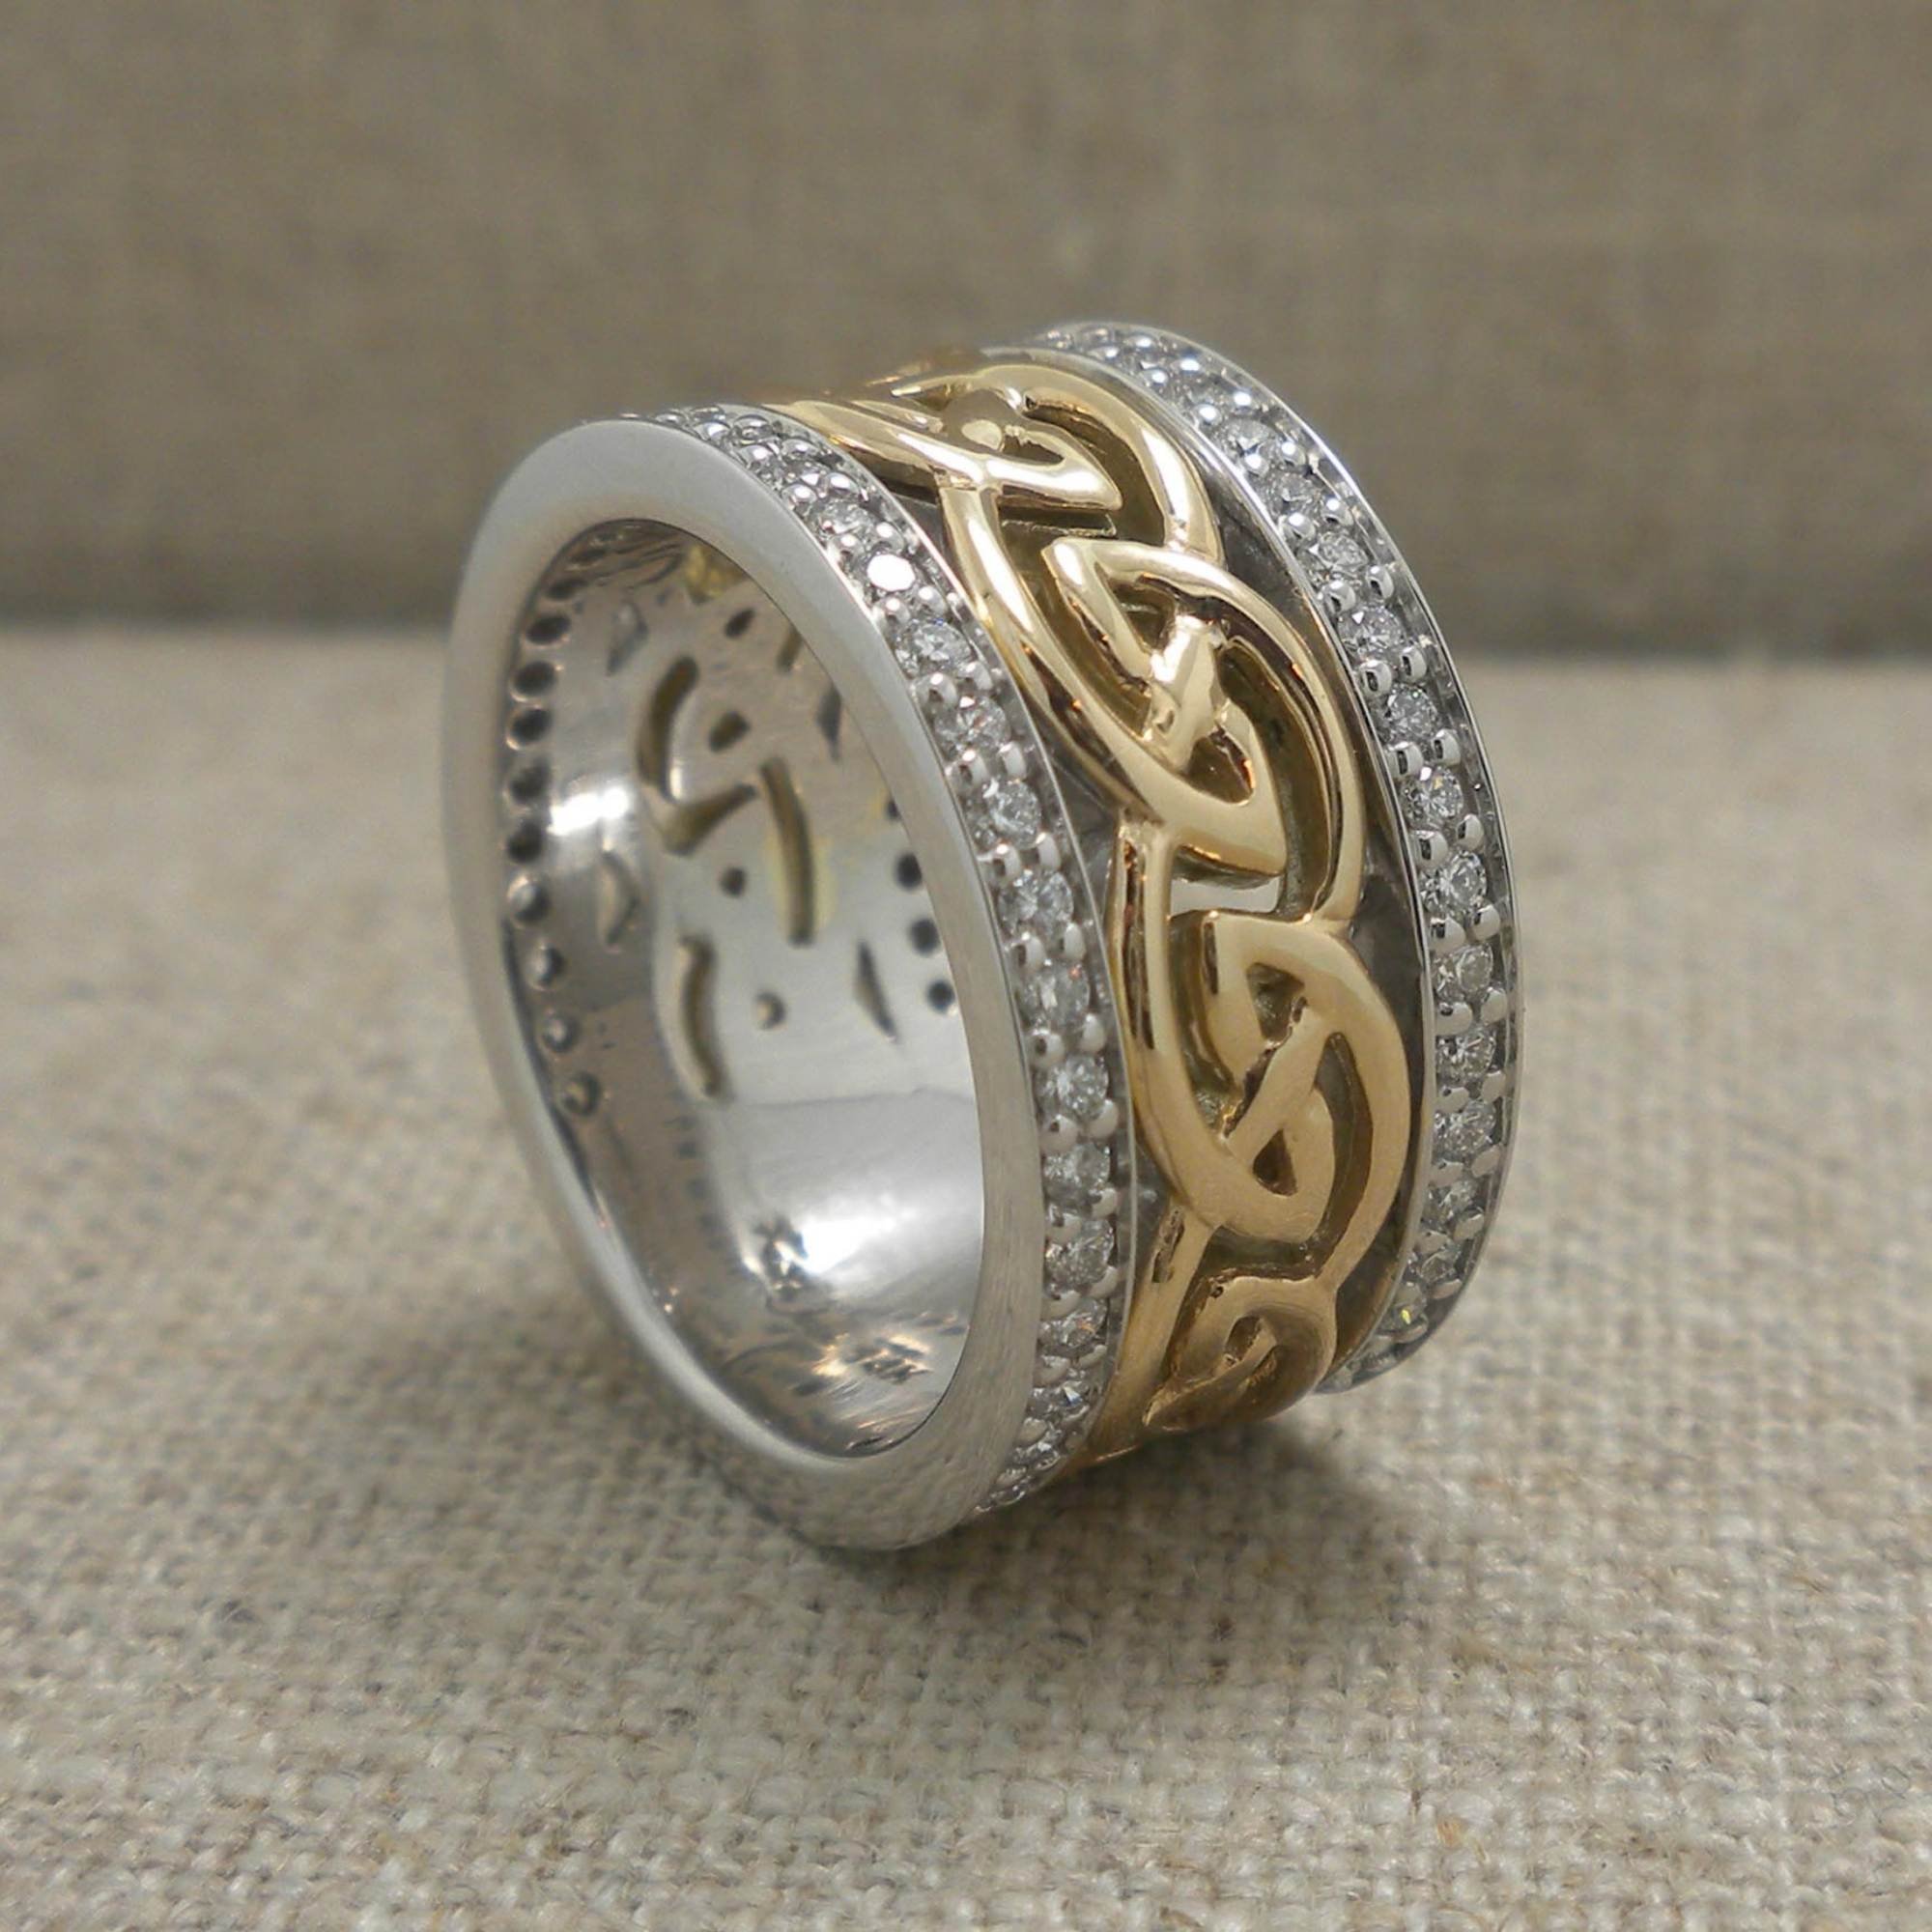 Keith Jack Custom Wedding Ring in 14K with Diamonds